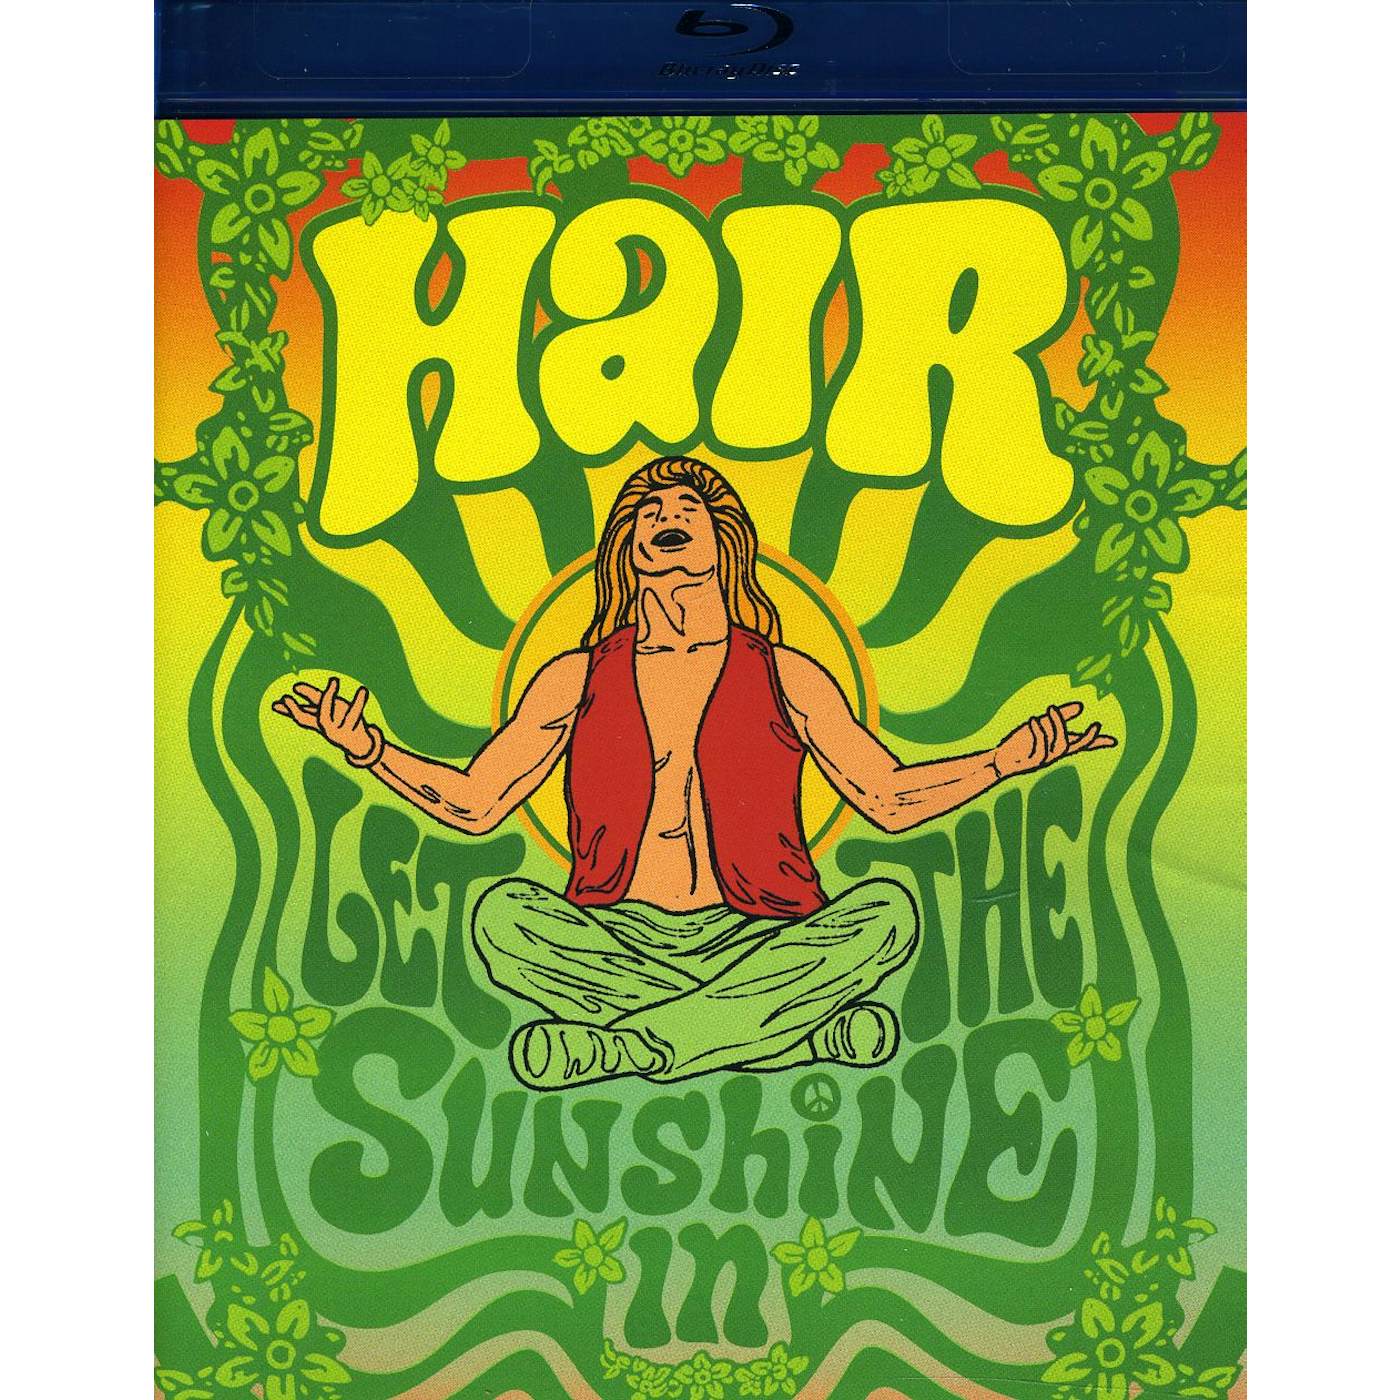 HAIR (1979) Blu-ray